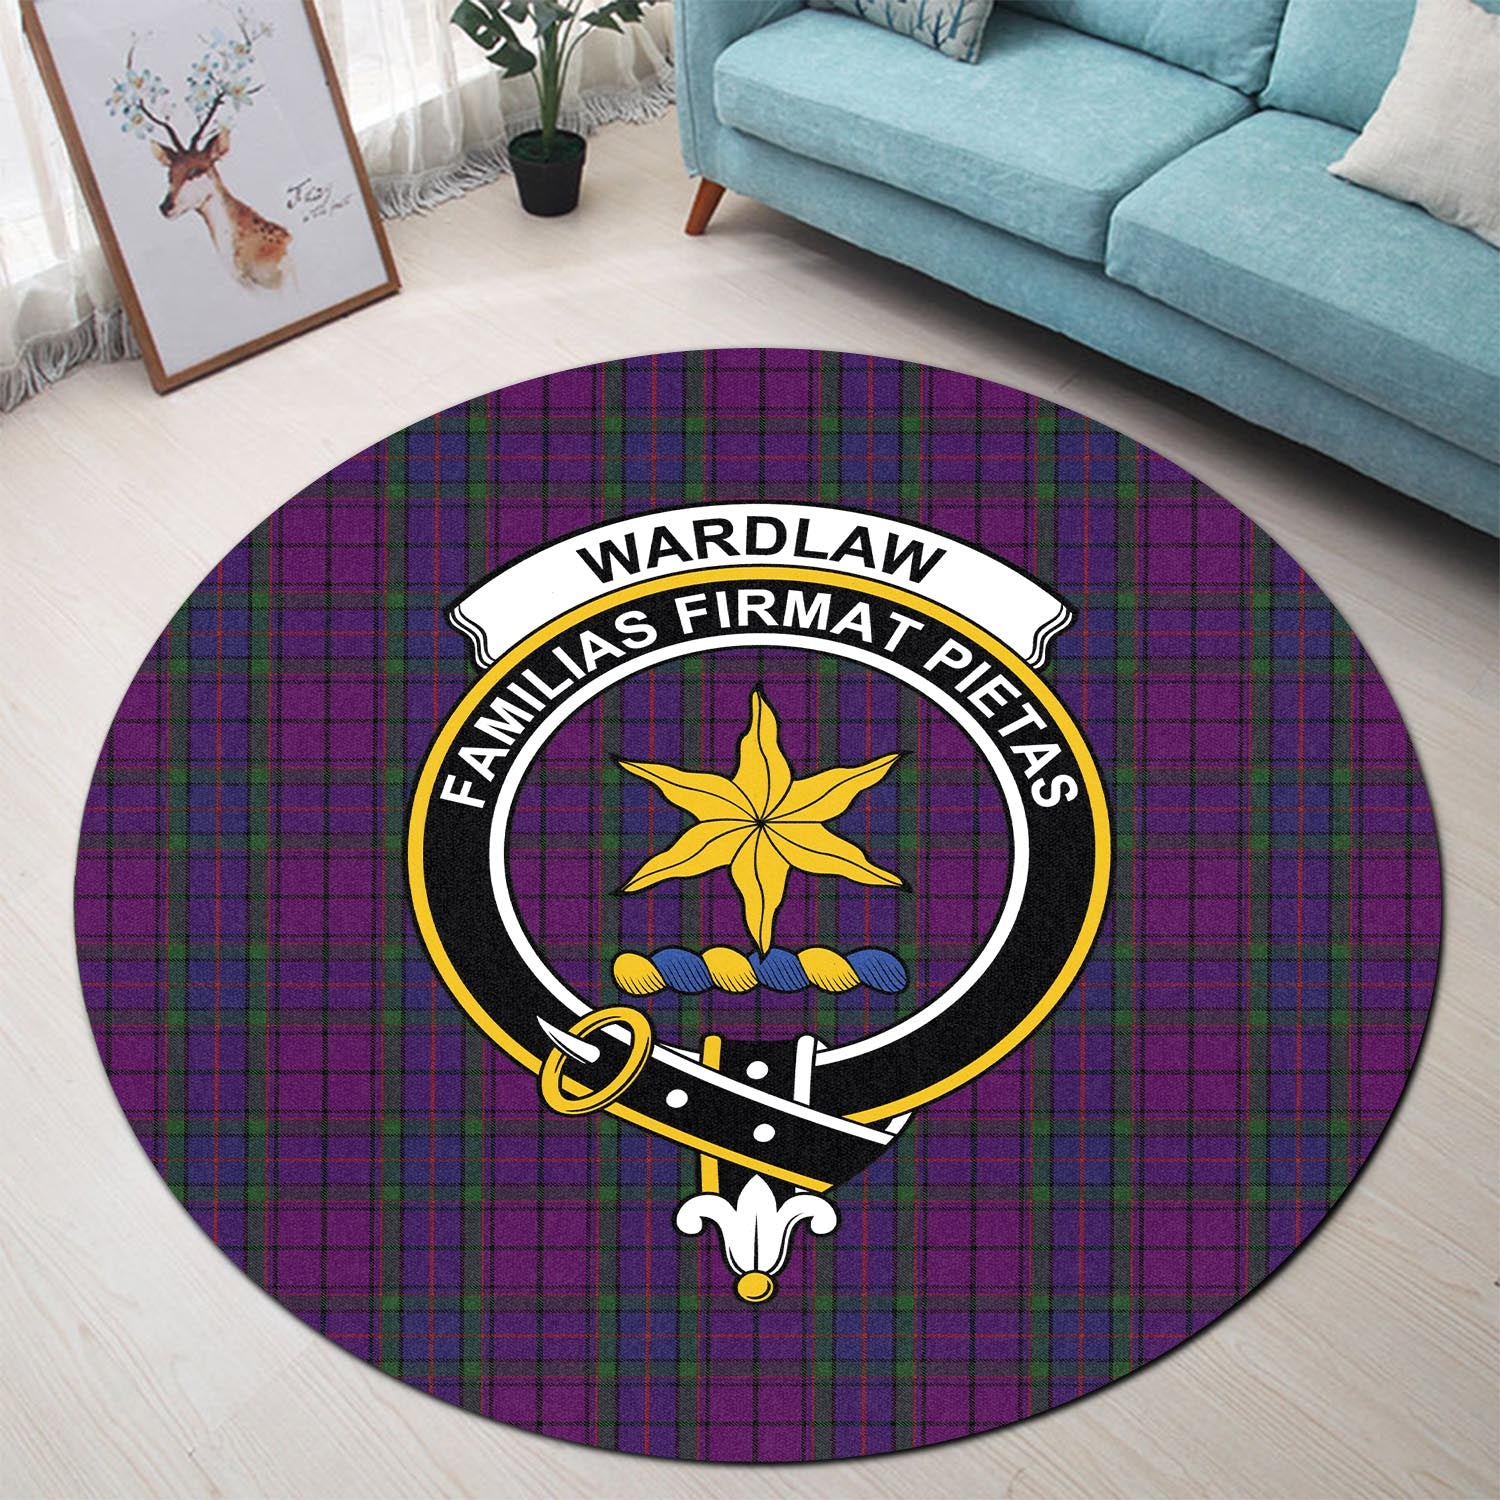 wardlaw-tartan-round-rug-with-family-crest